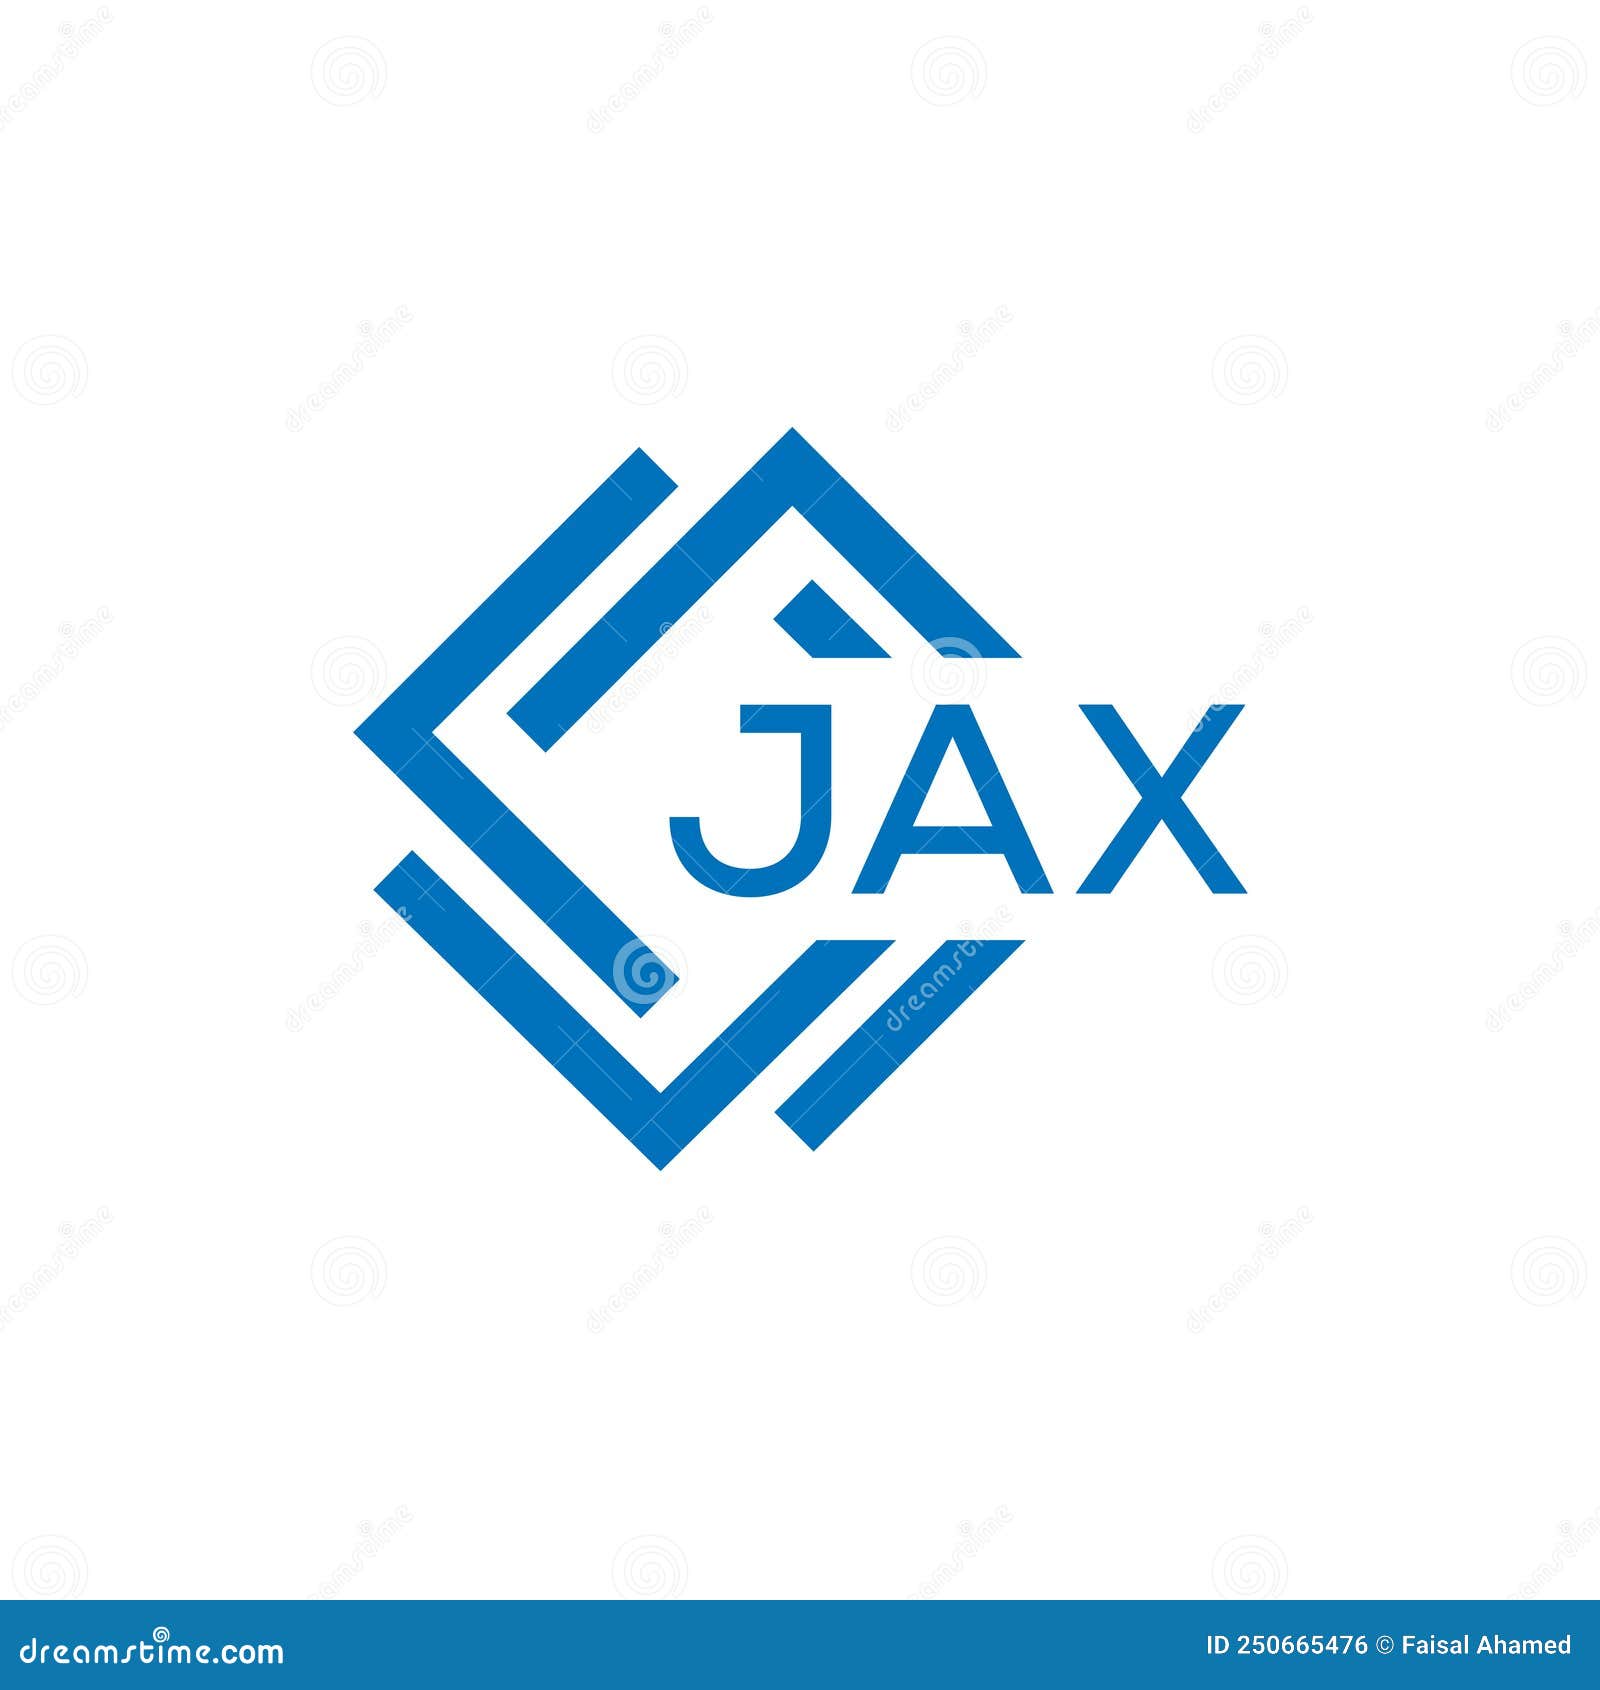 jax letter logo  on white background. jax creative circle letter logo concept. jax letter .jax letter logo  on